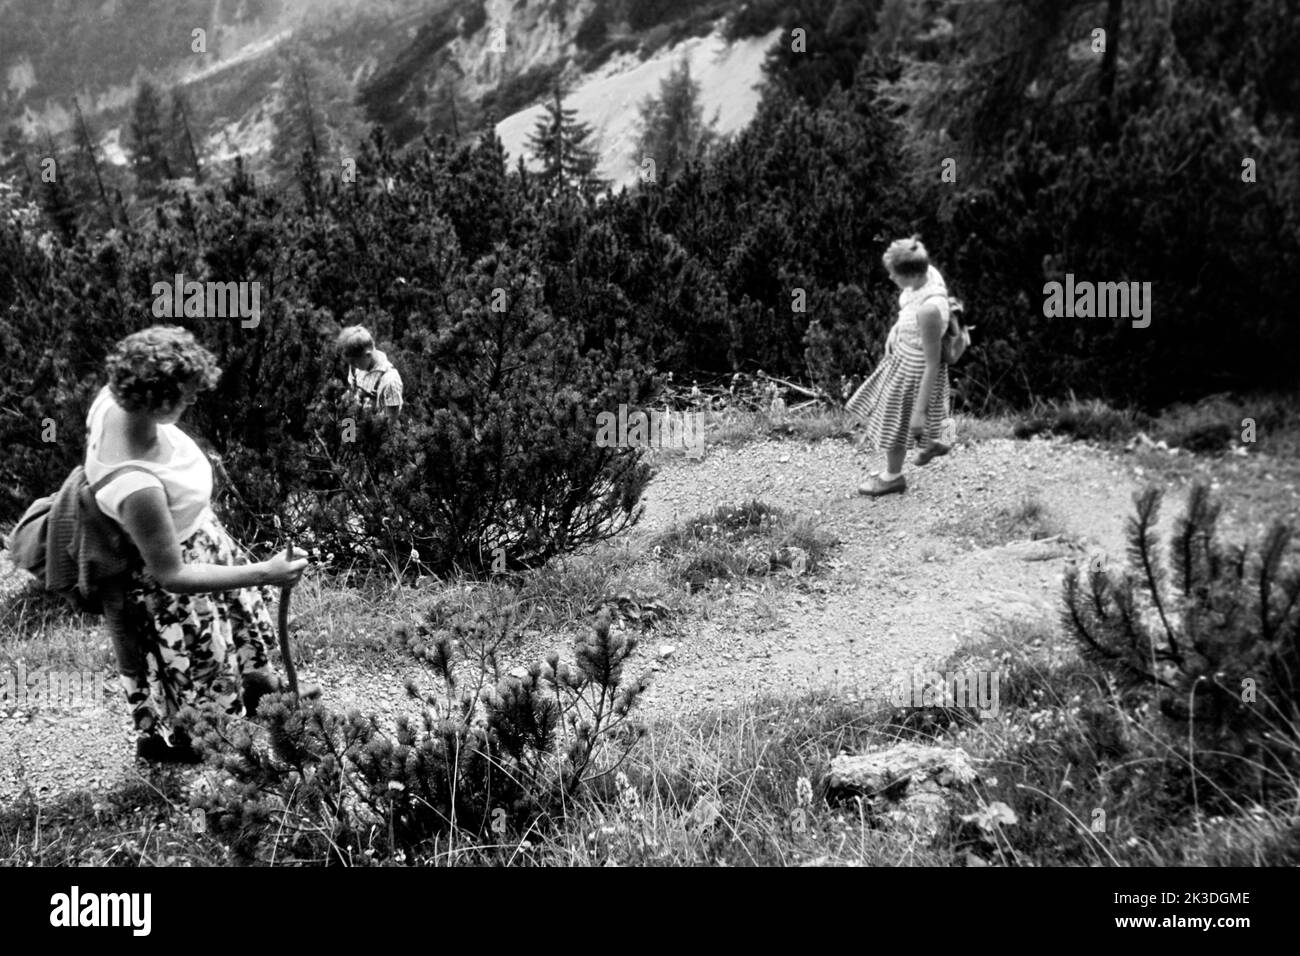 Die Familie des Fotografen wandert im Saalfeldener Becken, Salzburger Land, 1960. La famiglia del fotografo fa escursioni nel bacino di Saalfelden, nella regione di Salisburgo, 1960. Foto Stock